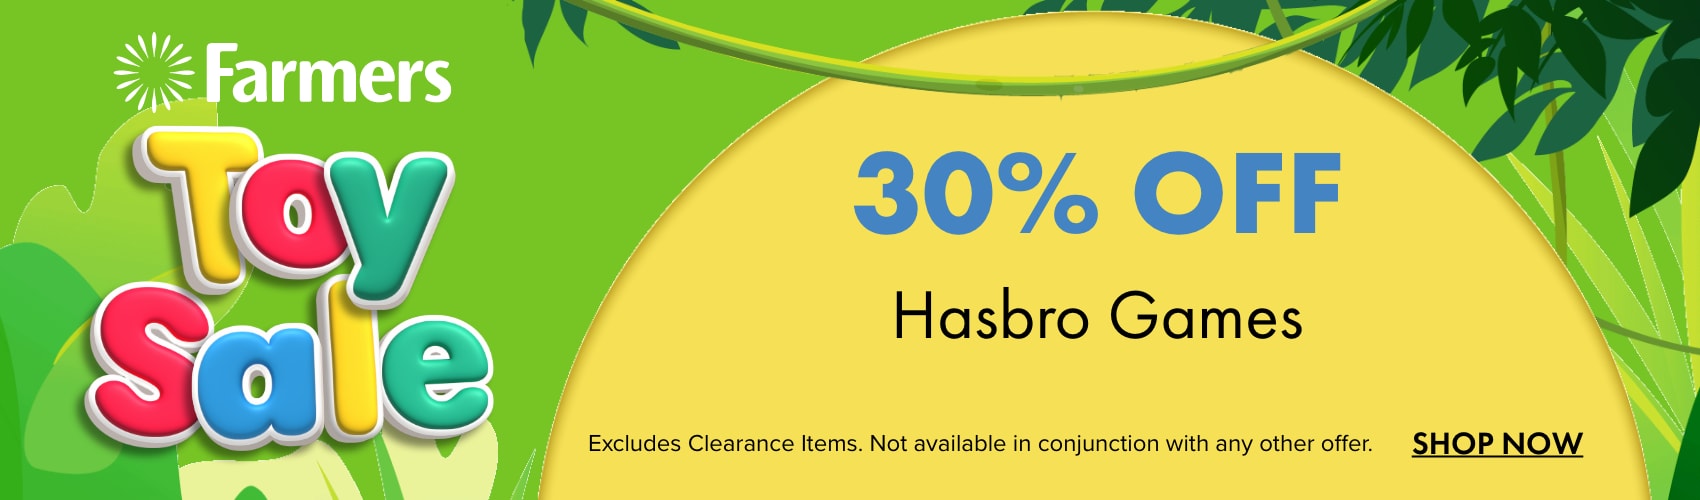 30% OFF Hasbro Games